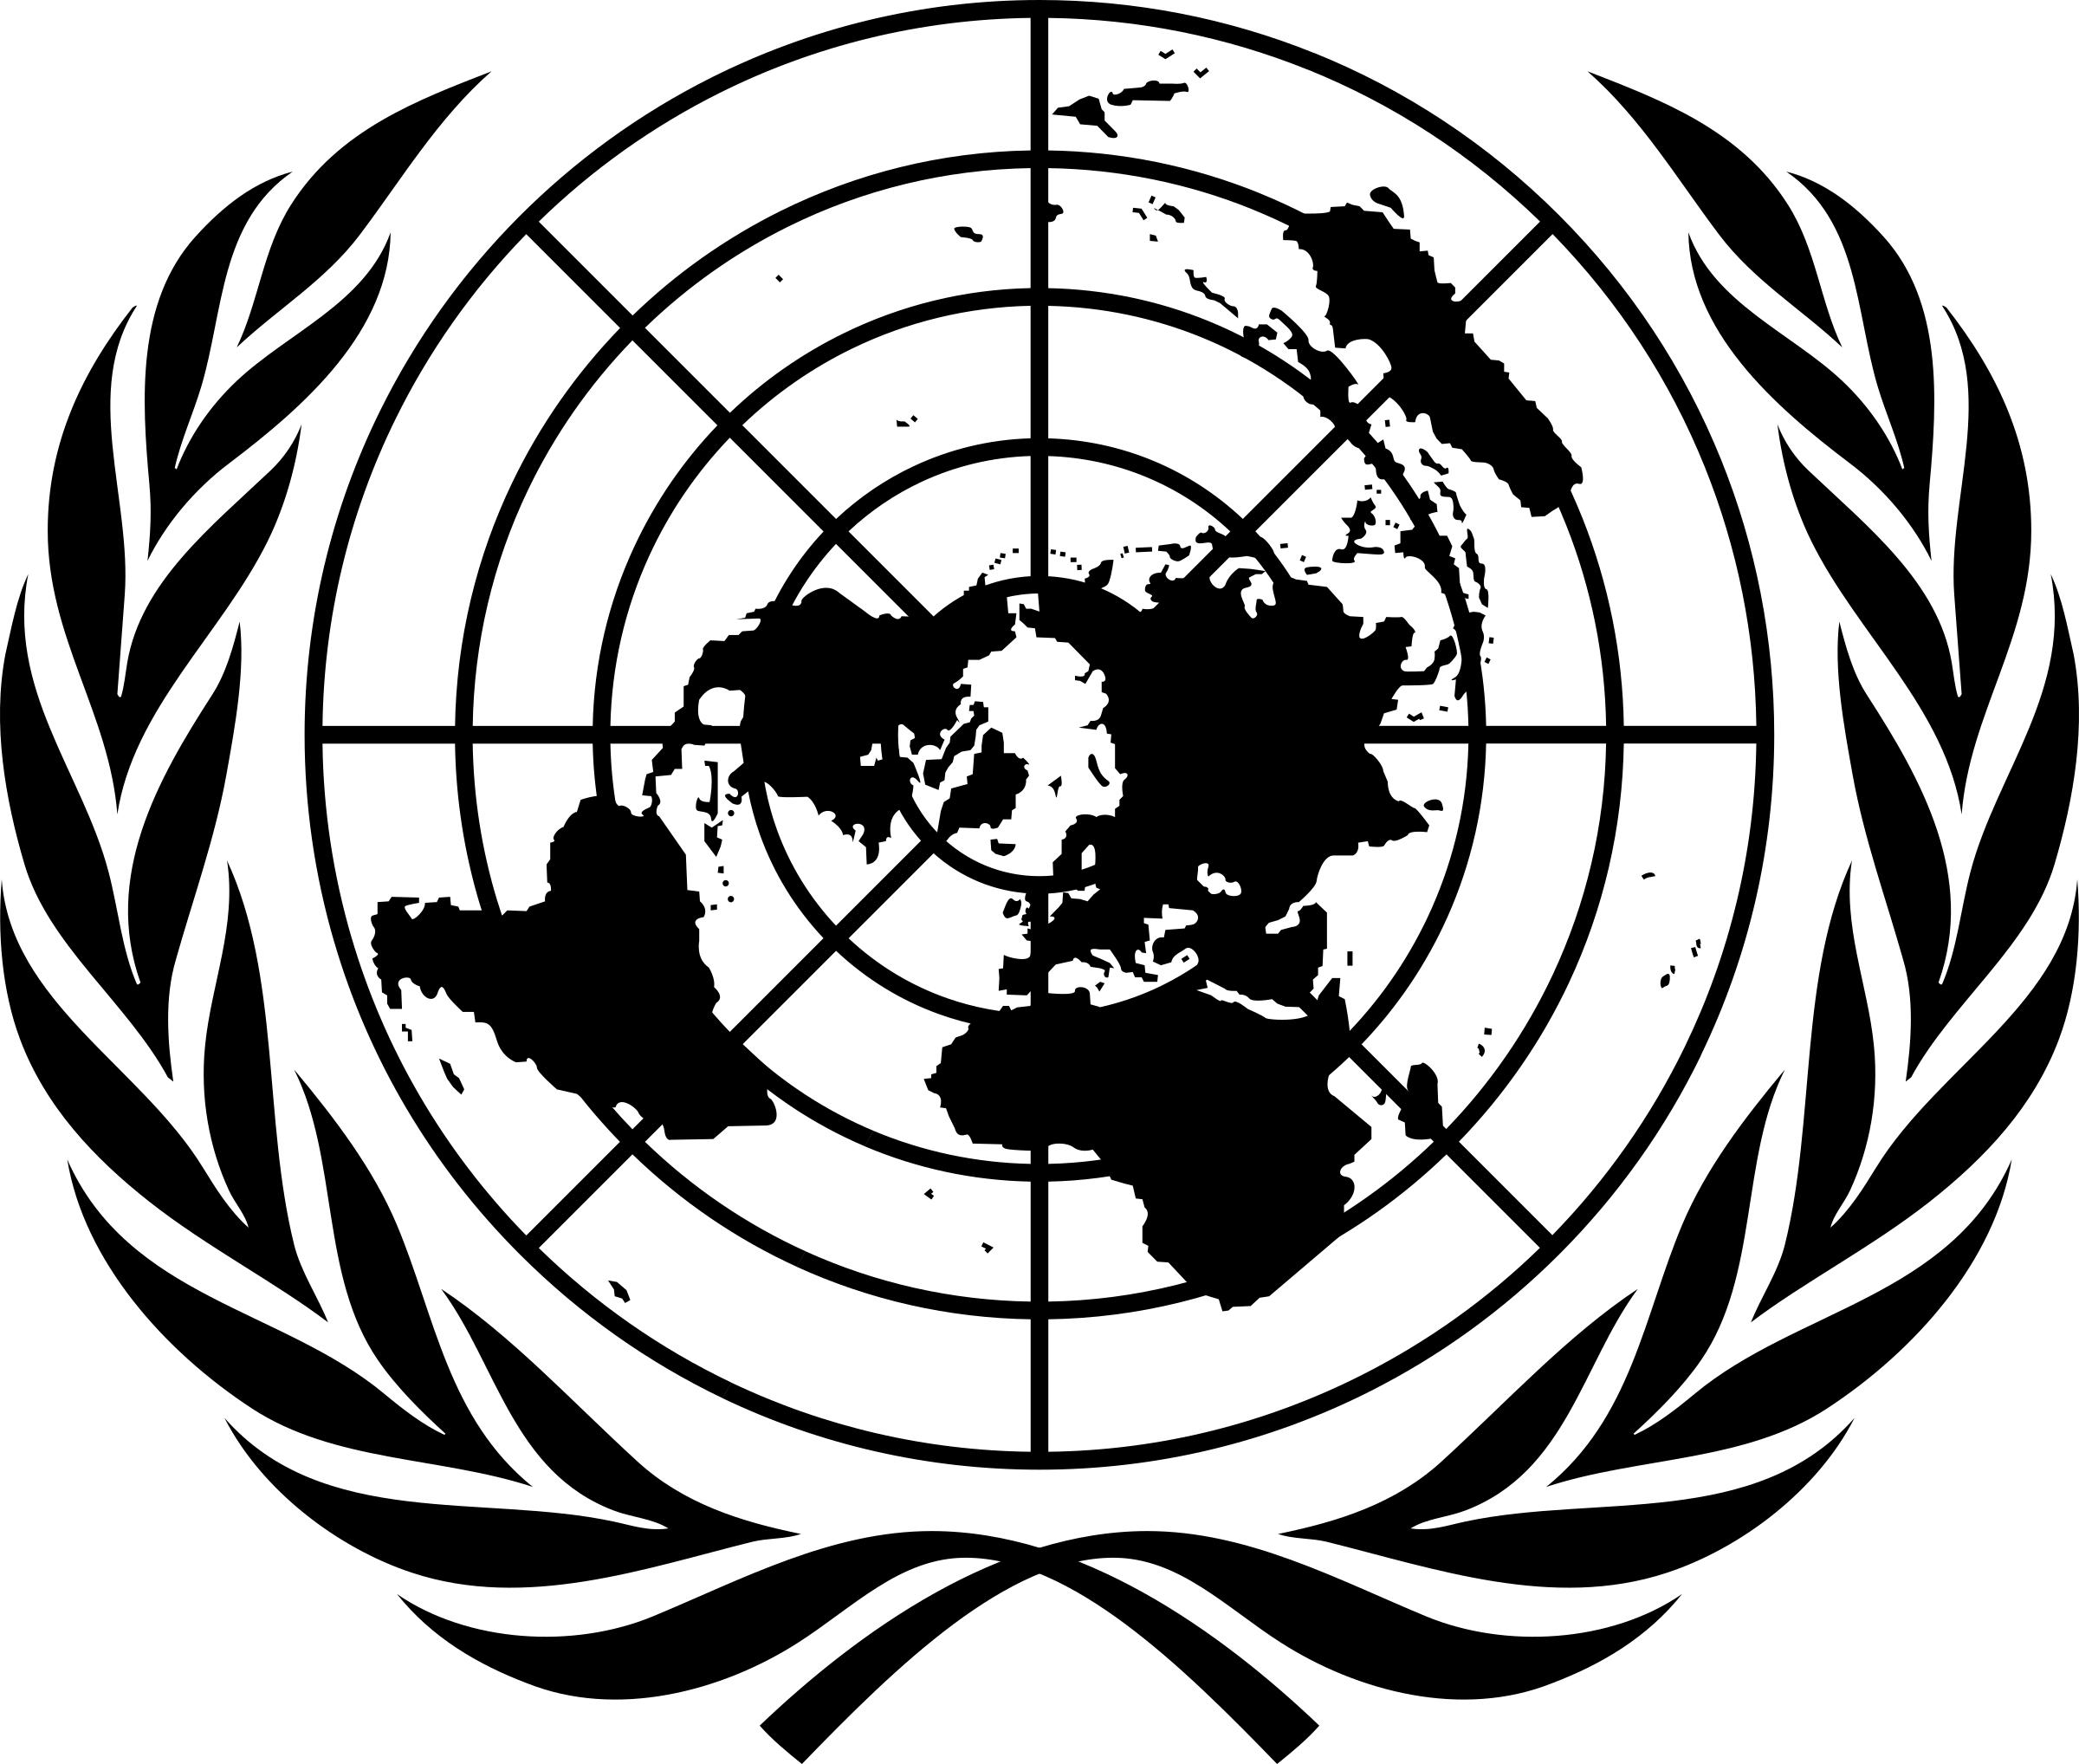 United nations symbol png